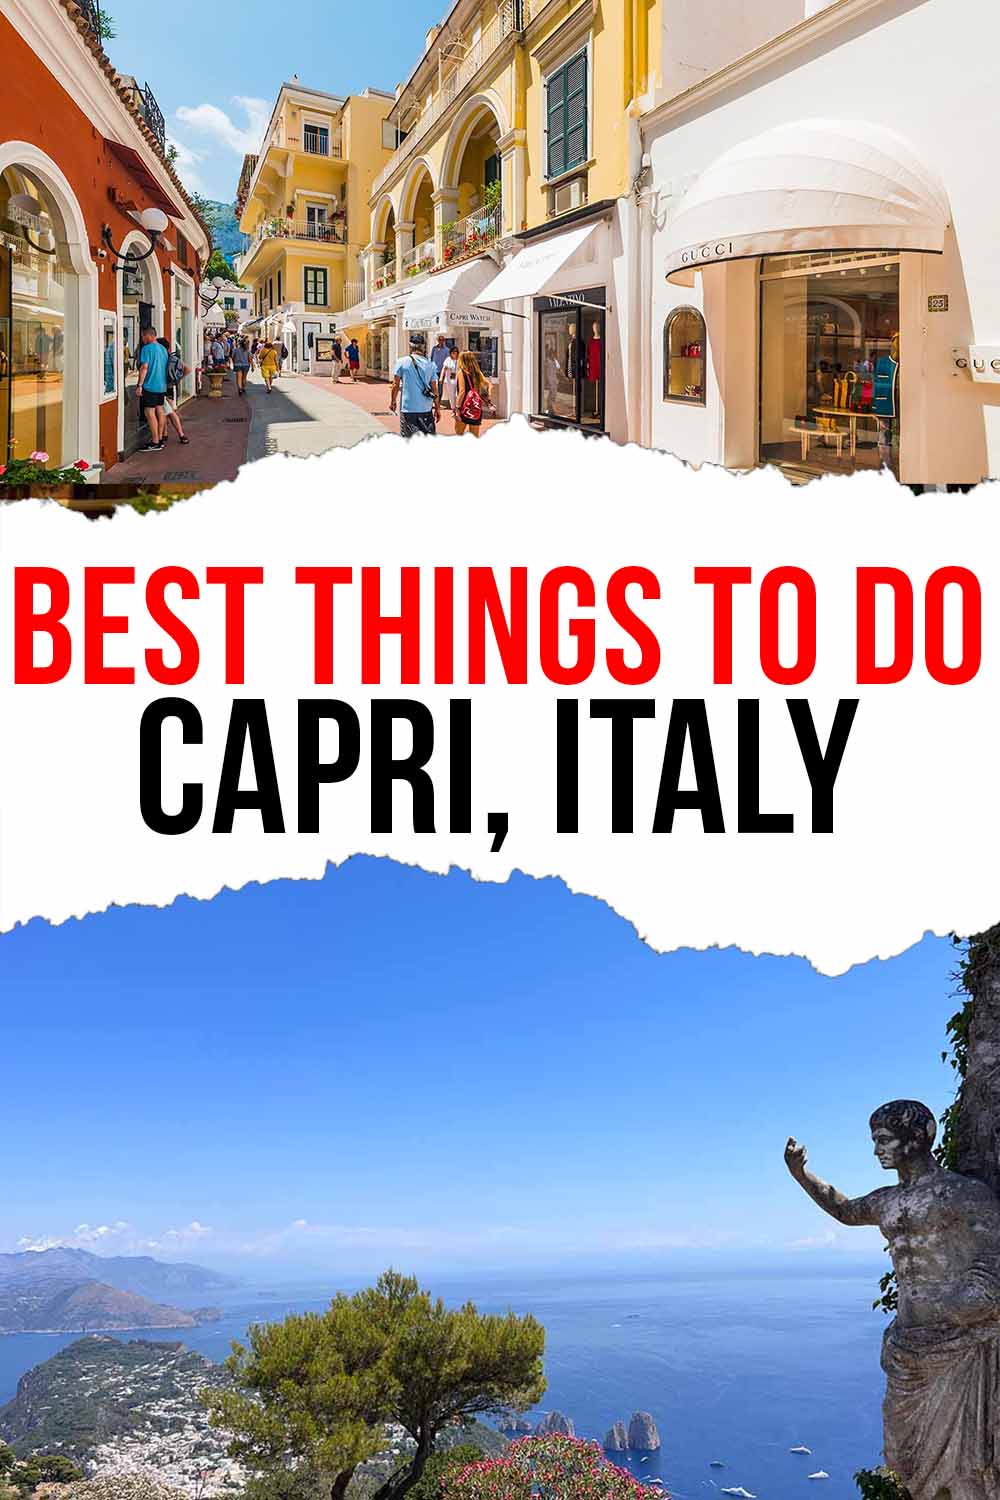 What to do in Capri, Italy